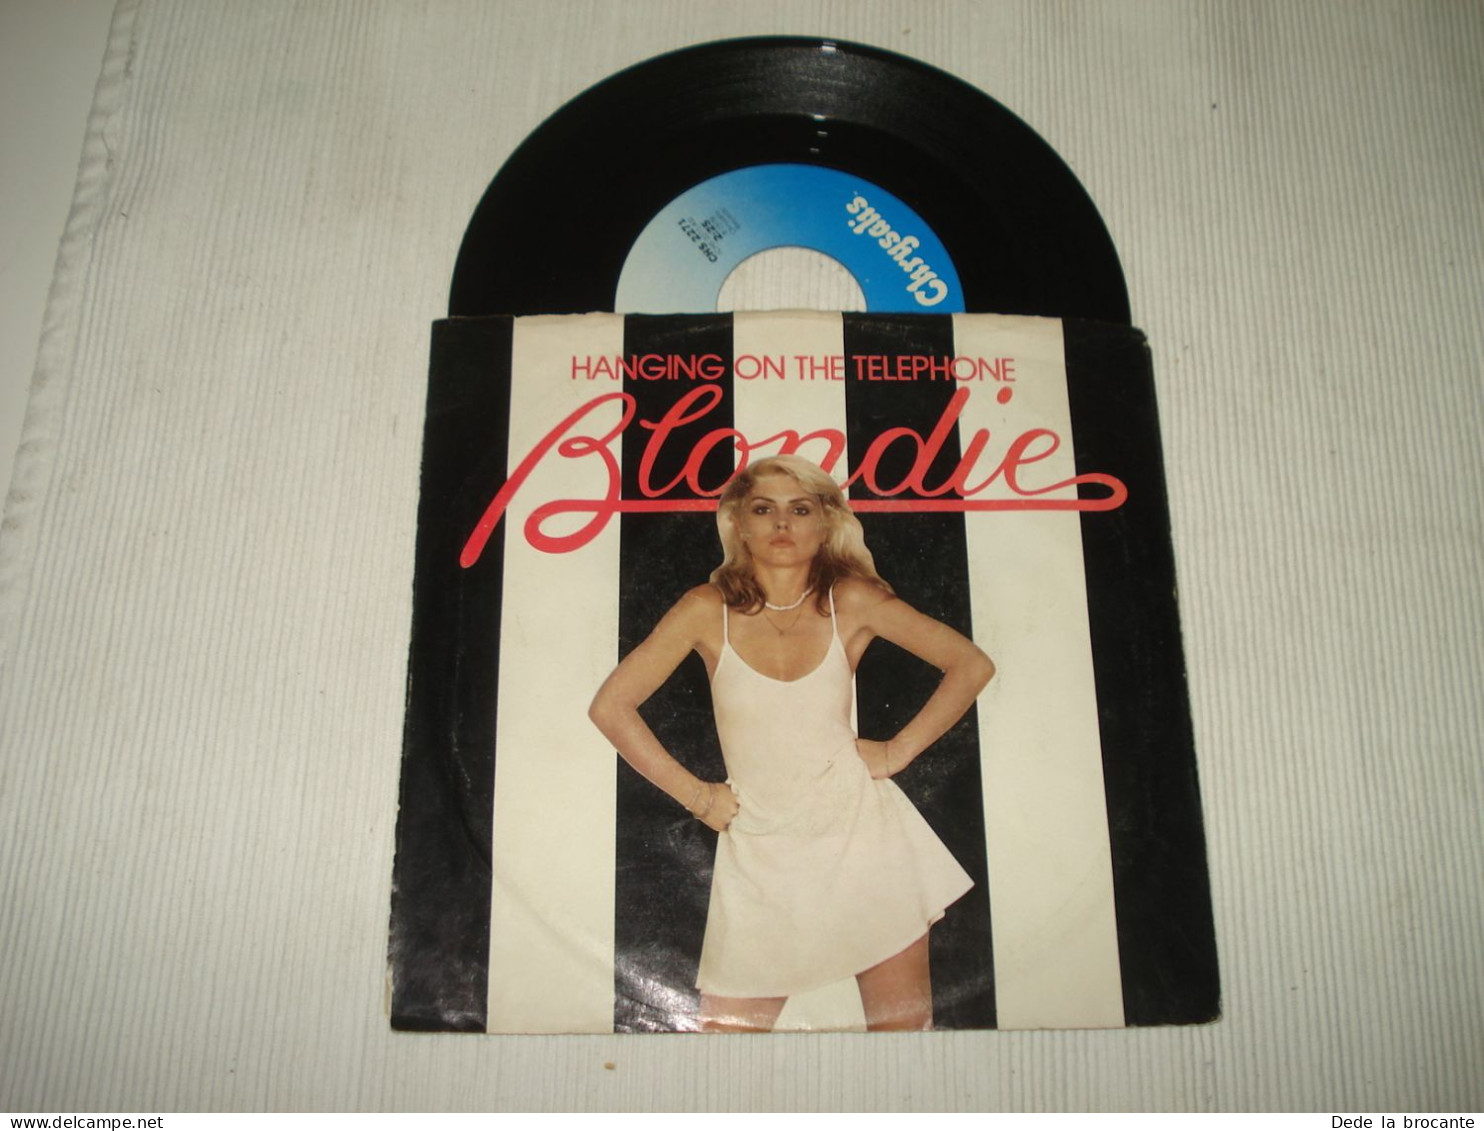 B14 / Blondie – Hanging On The Telephone - 7" - CHS 2271 - US 1978  VG++/VG++ - Rock